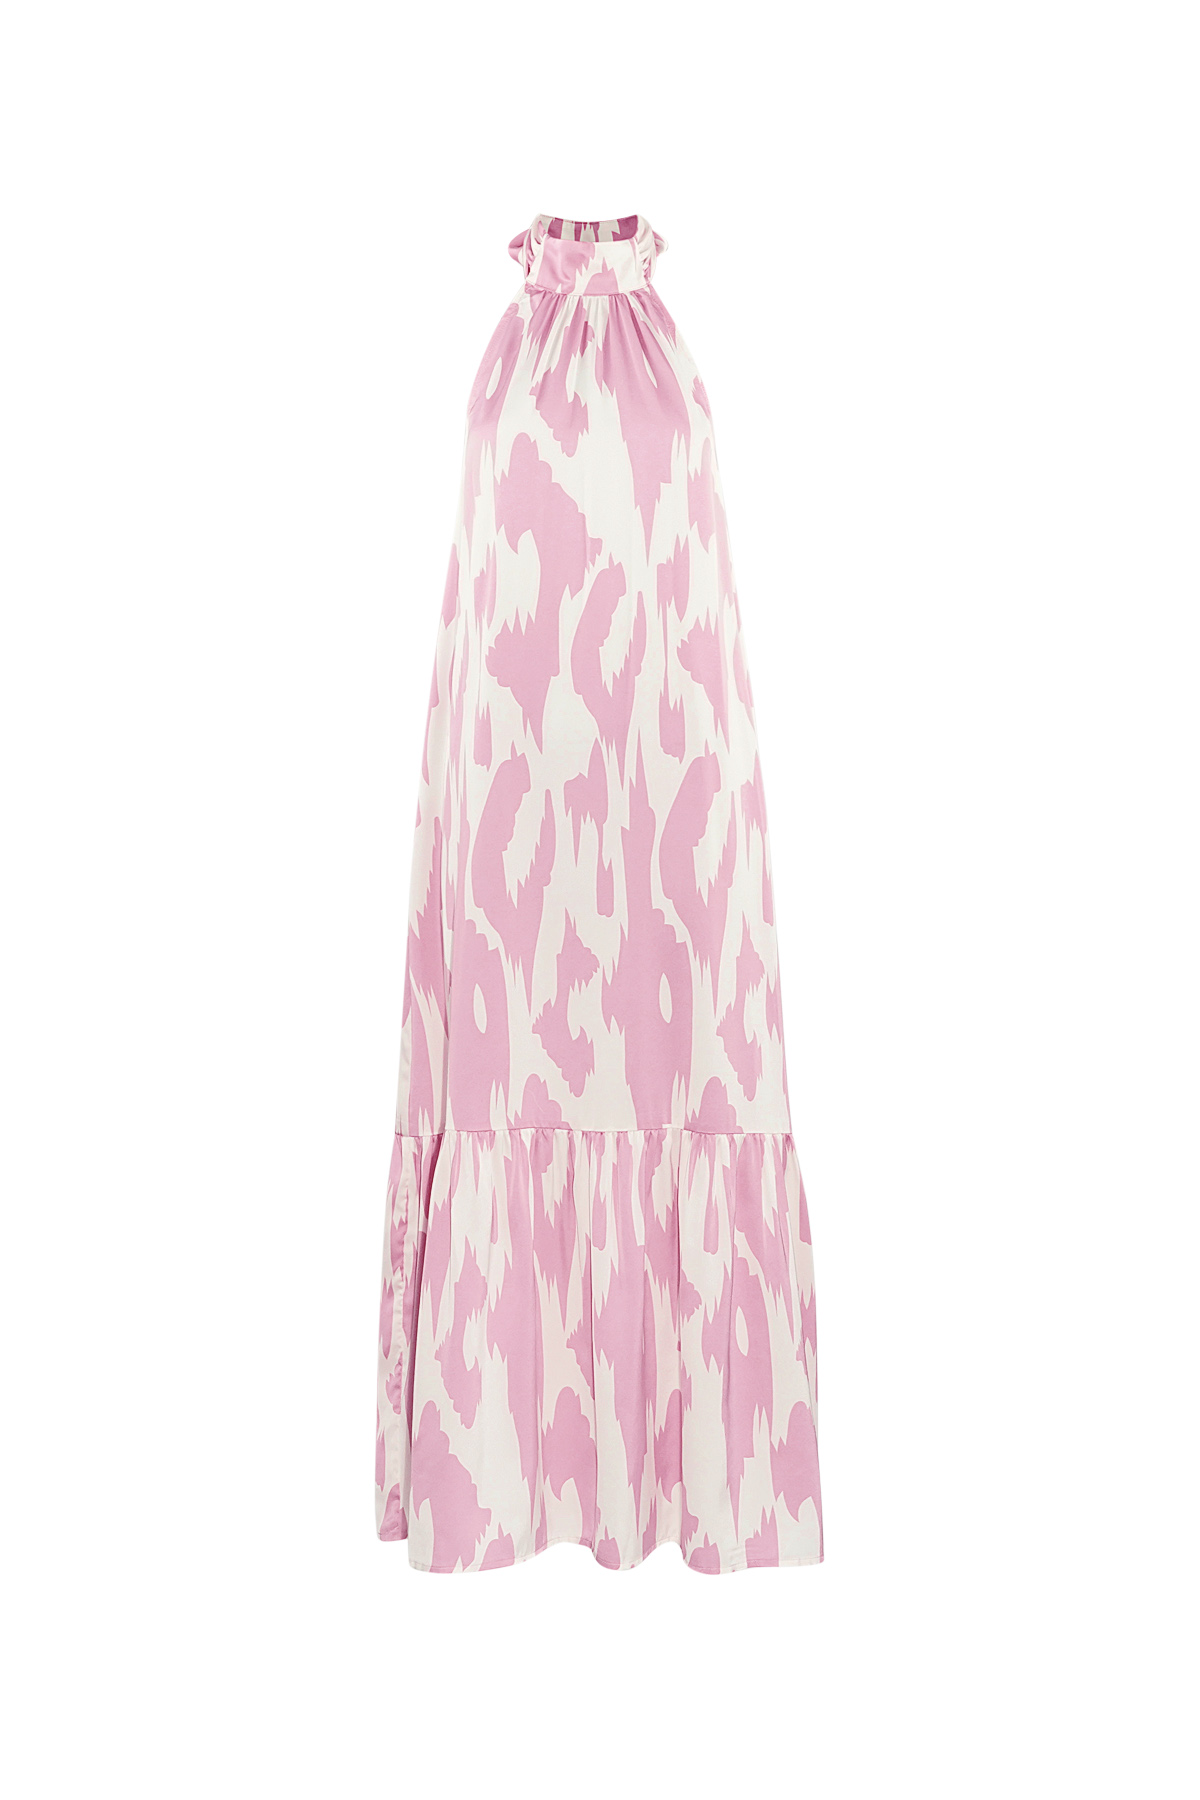 Halter dress with print - pink